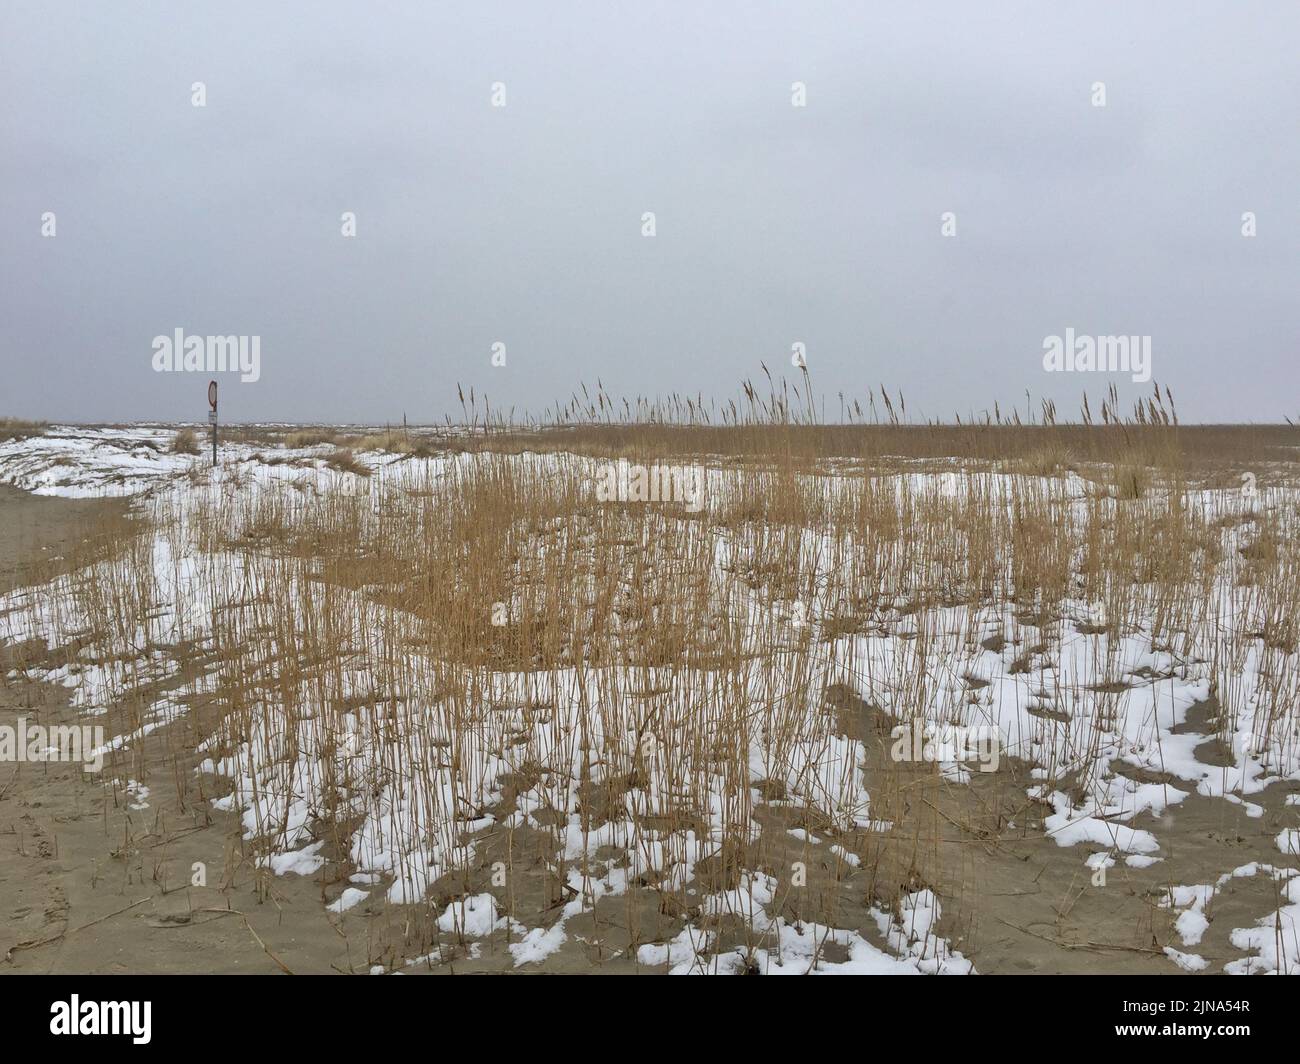 Snow melting on the beach in winter, Fanoe Bad, Fanoe, Jutland, Denmark Stock Photo